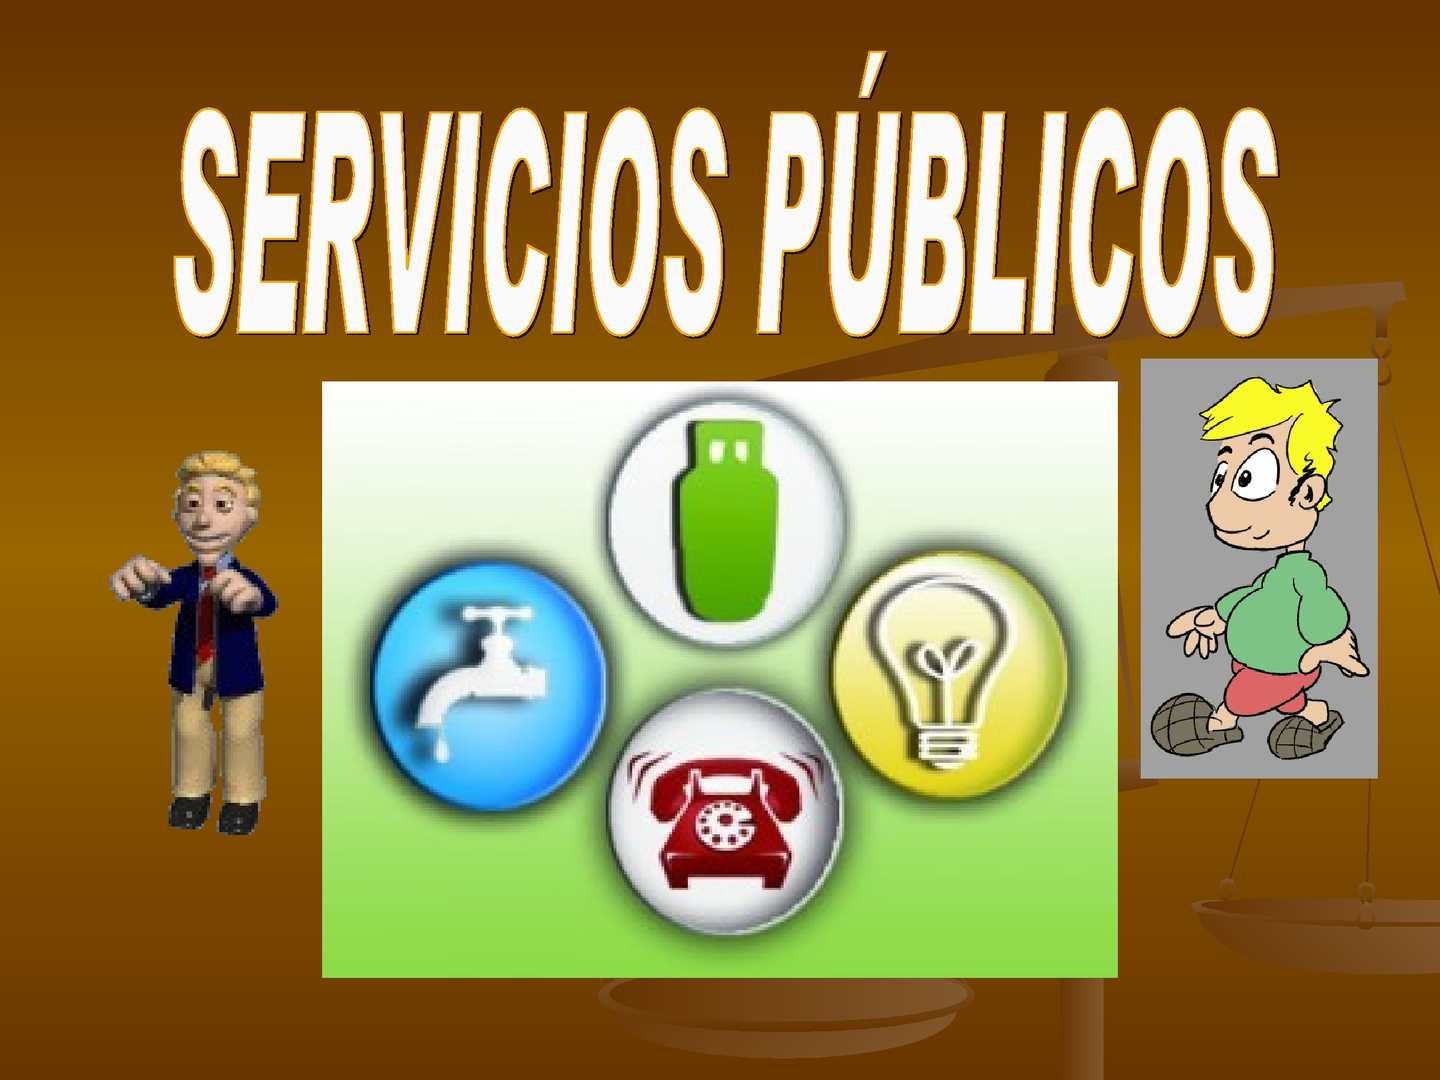 Servicios públicos | Social Studies - Quizizz